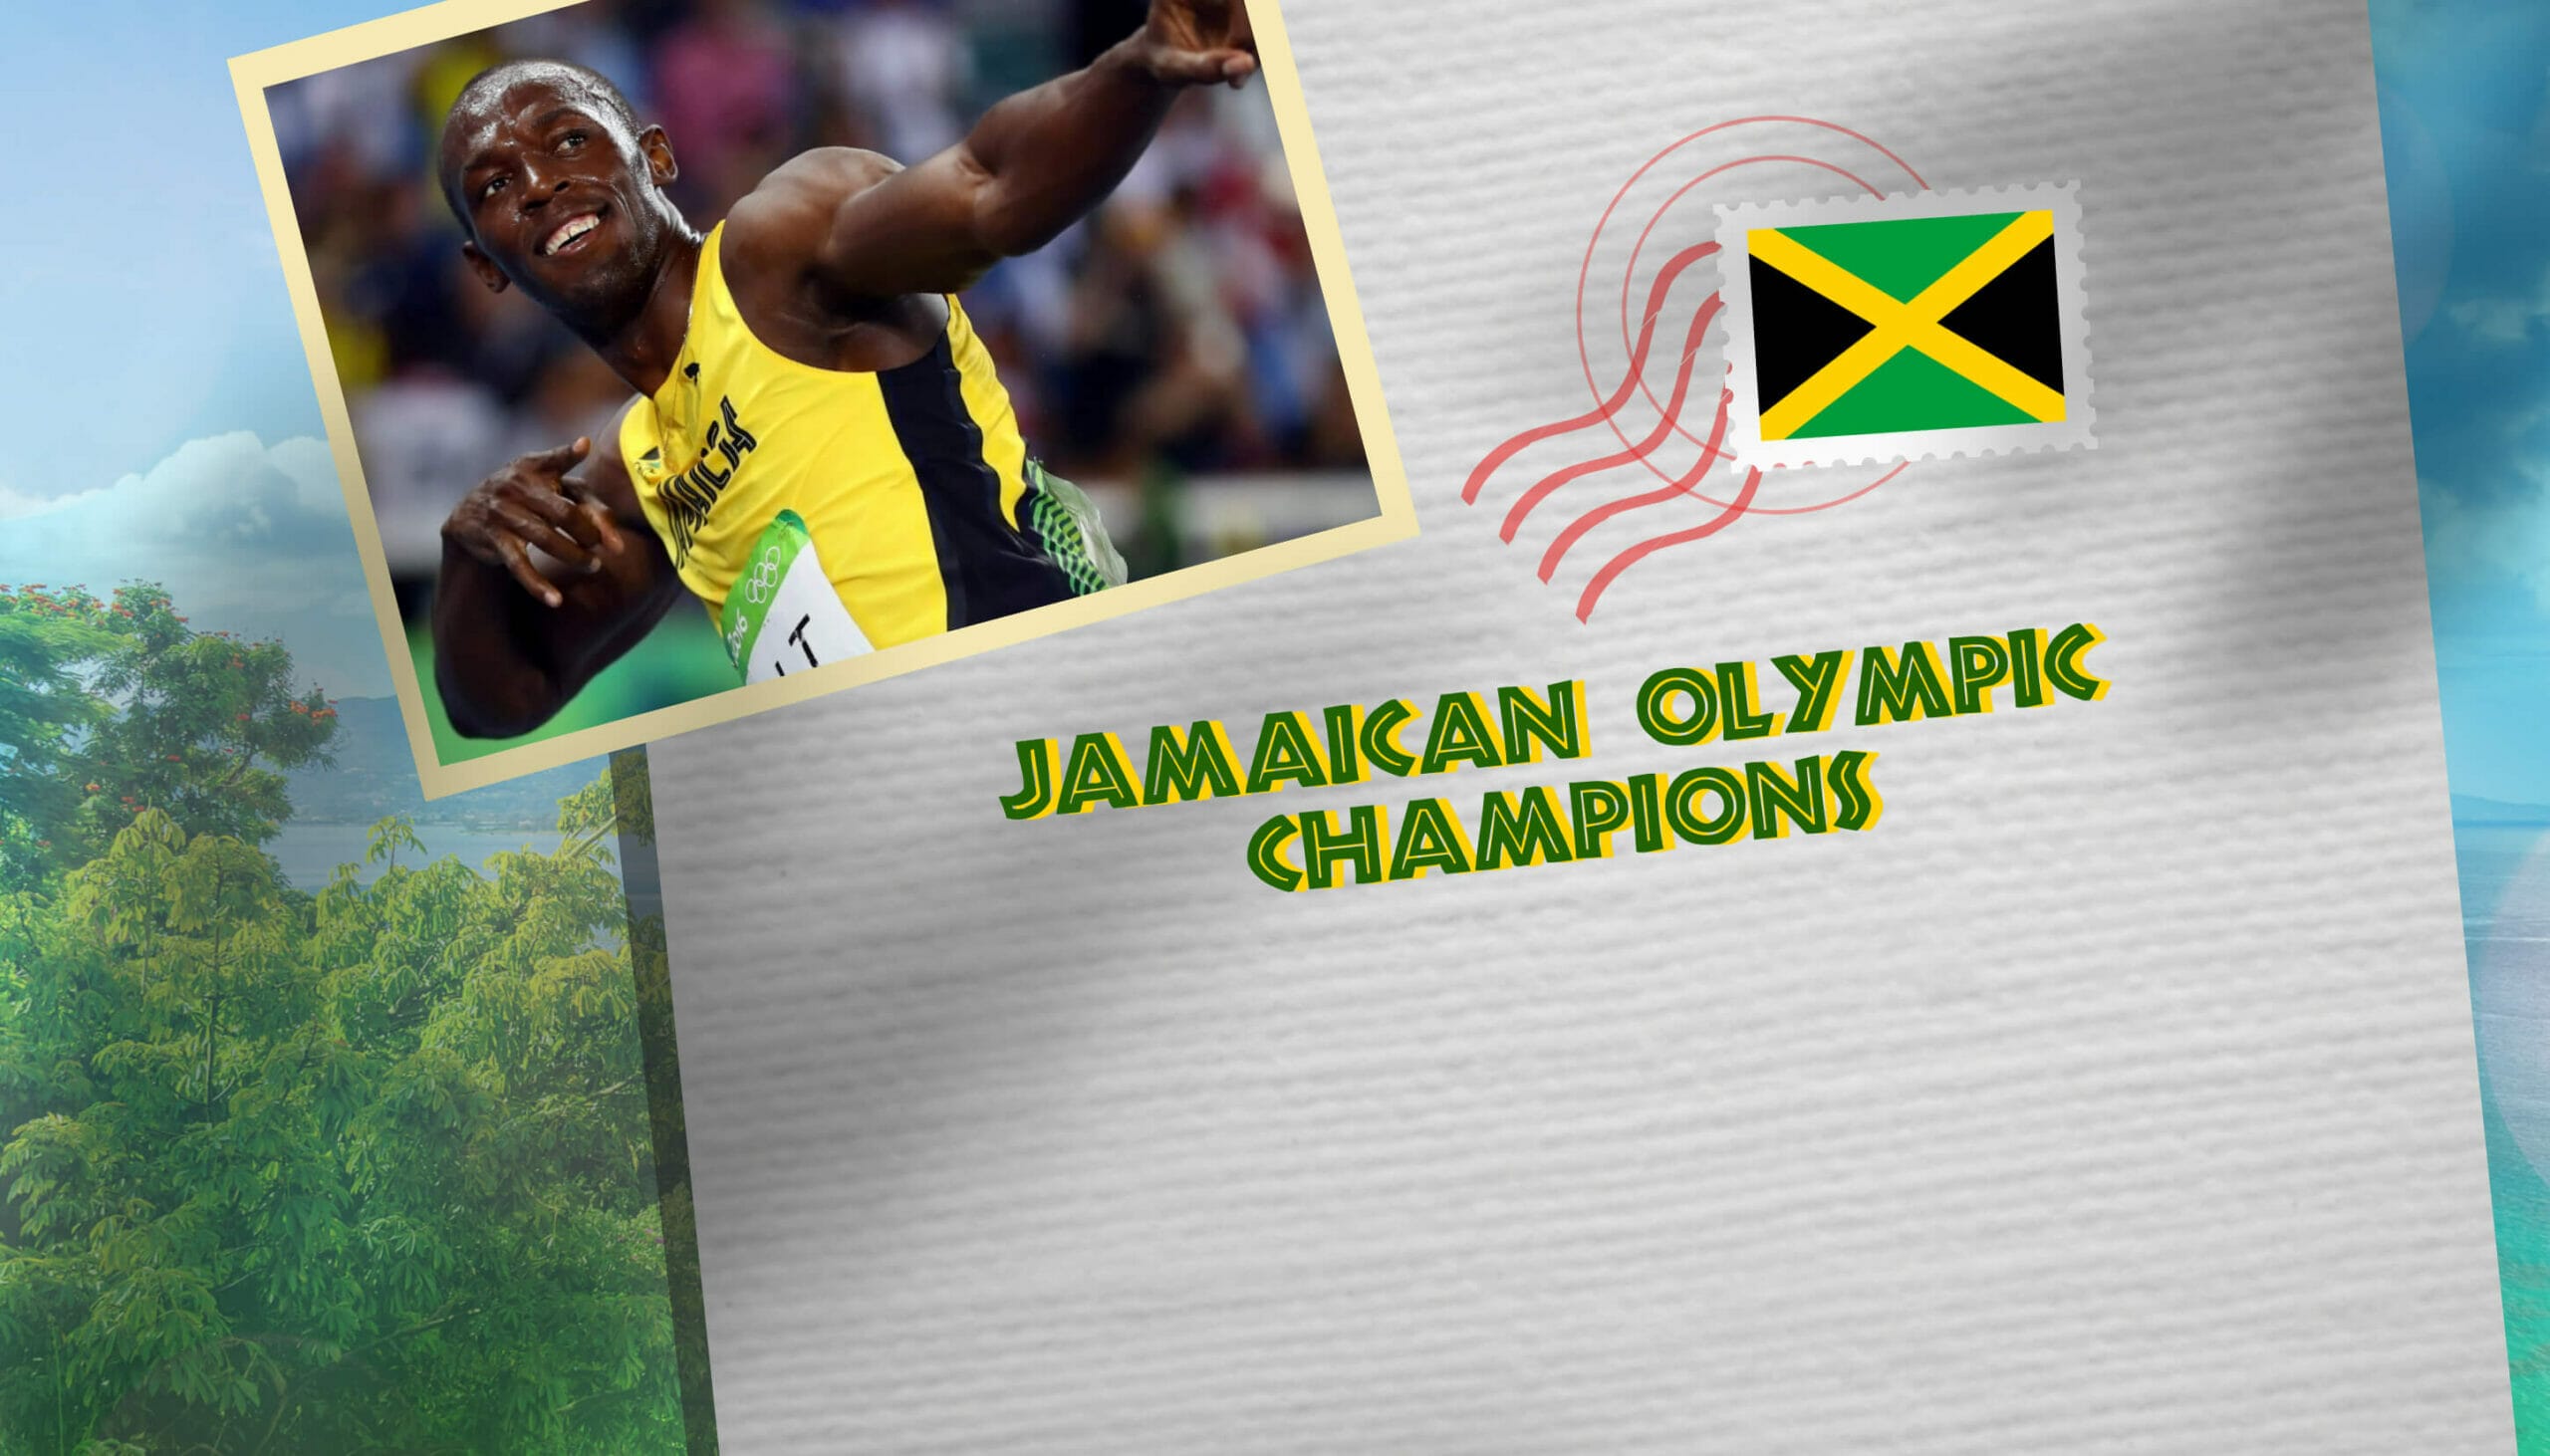 Jamaican Olympic Champions